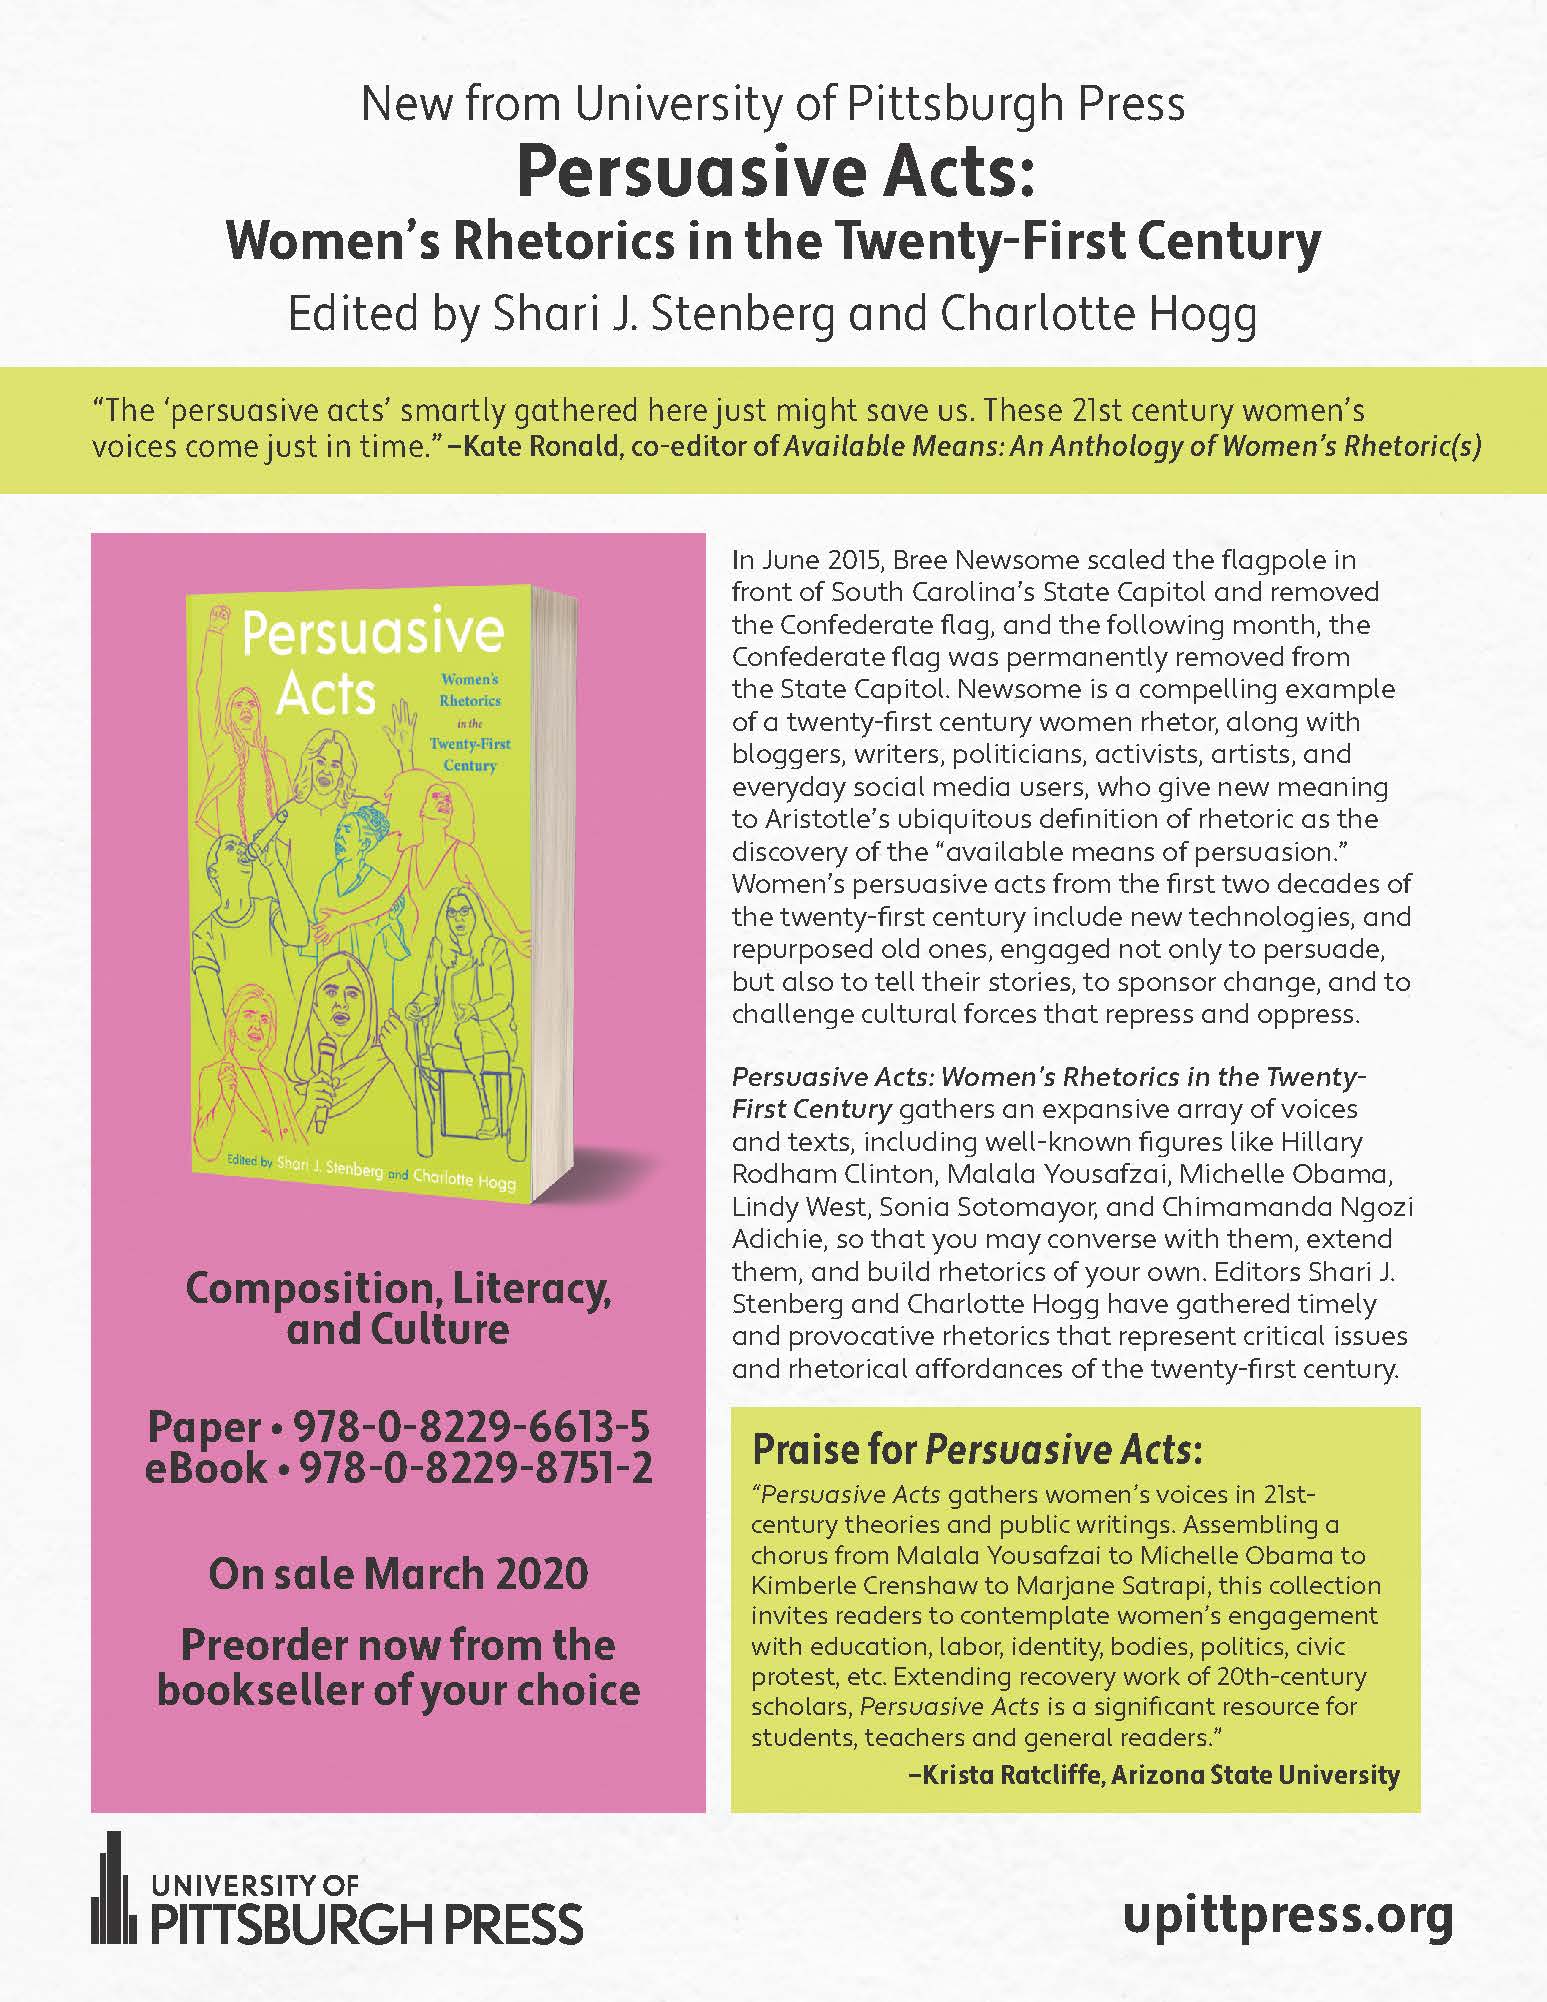 Persuasive Acts: Women's Rhetorics in the Twenty-First Century Flyer 